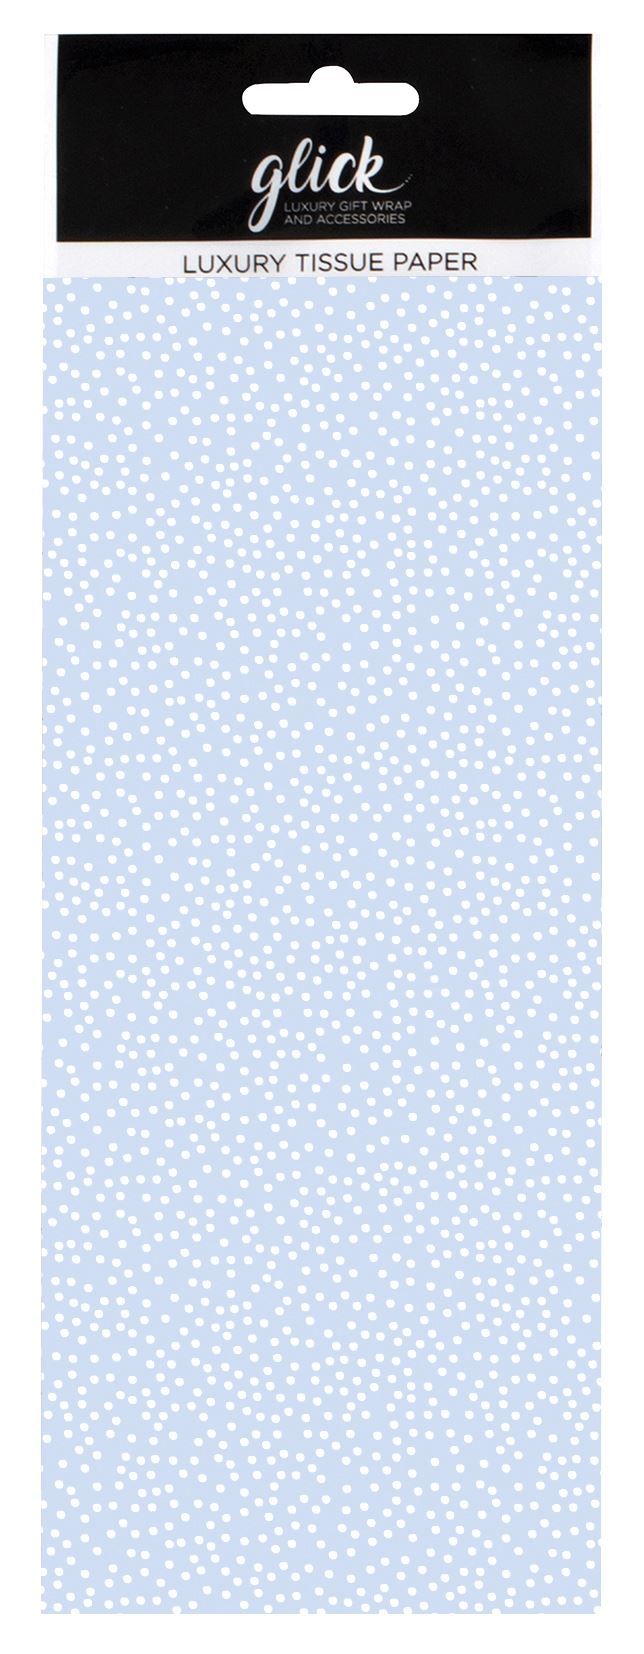 Blue & White Polka Dot Print Luxury Tissue Paper - Pack Of 4 LARGE Sheets -